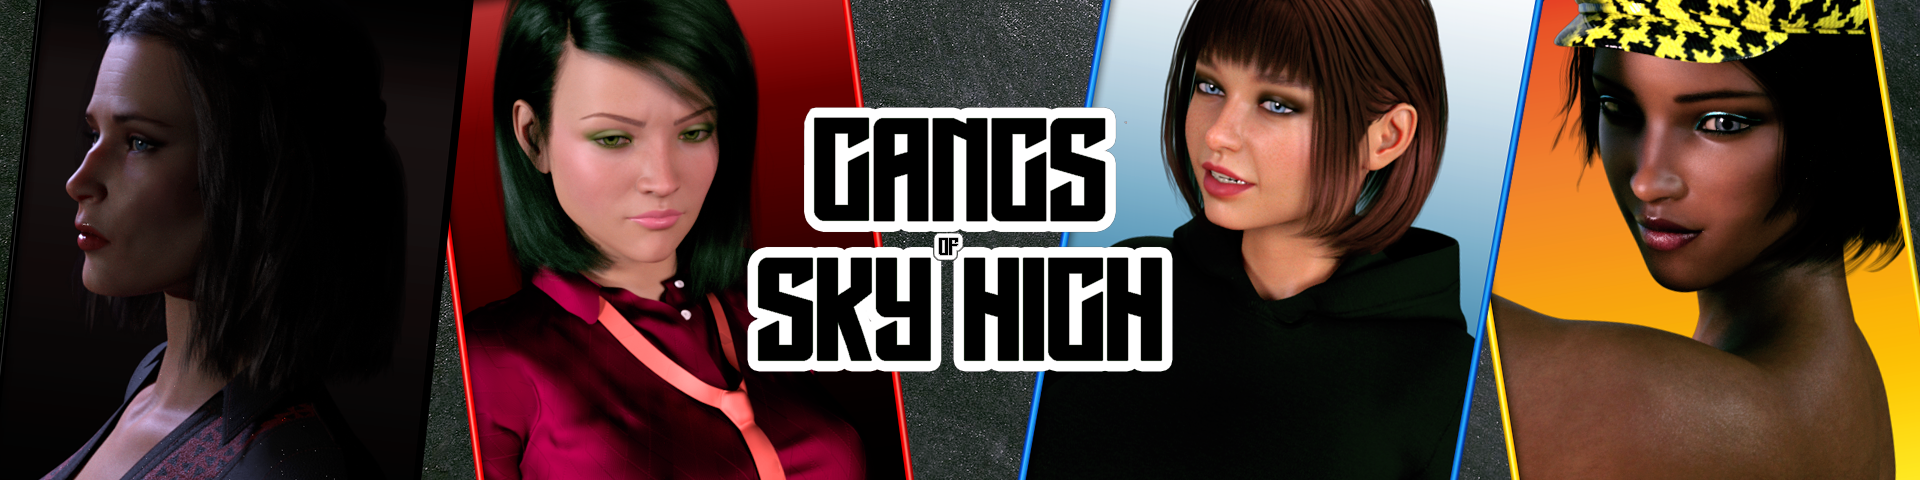 Gangs of Sky High poster